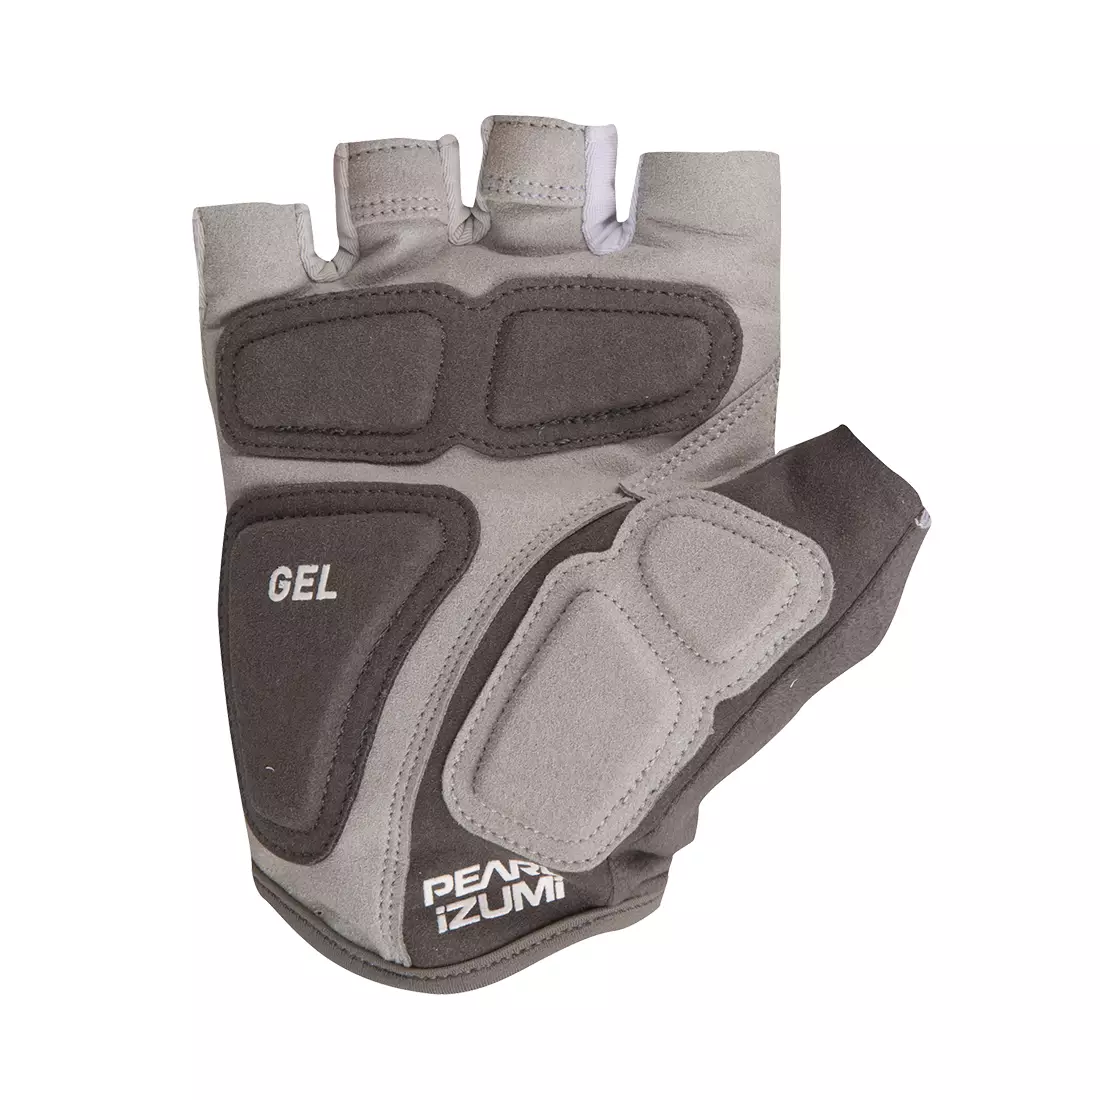 PEARL IZUMI ELITE cycling gloves, GEL 14141601-508 white